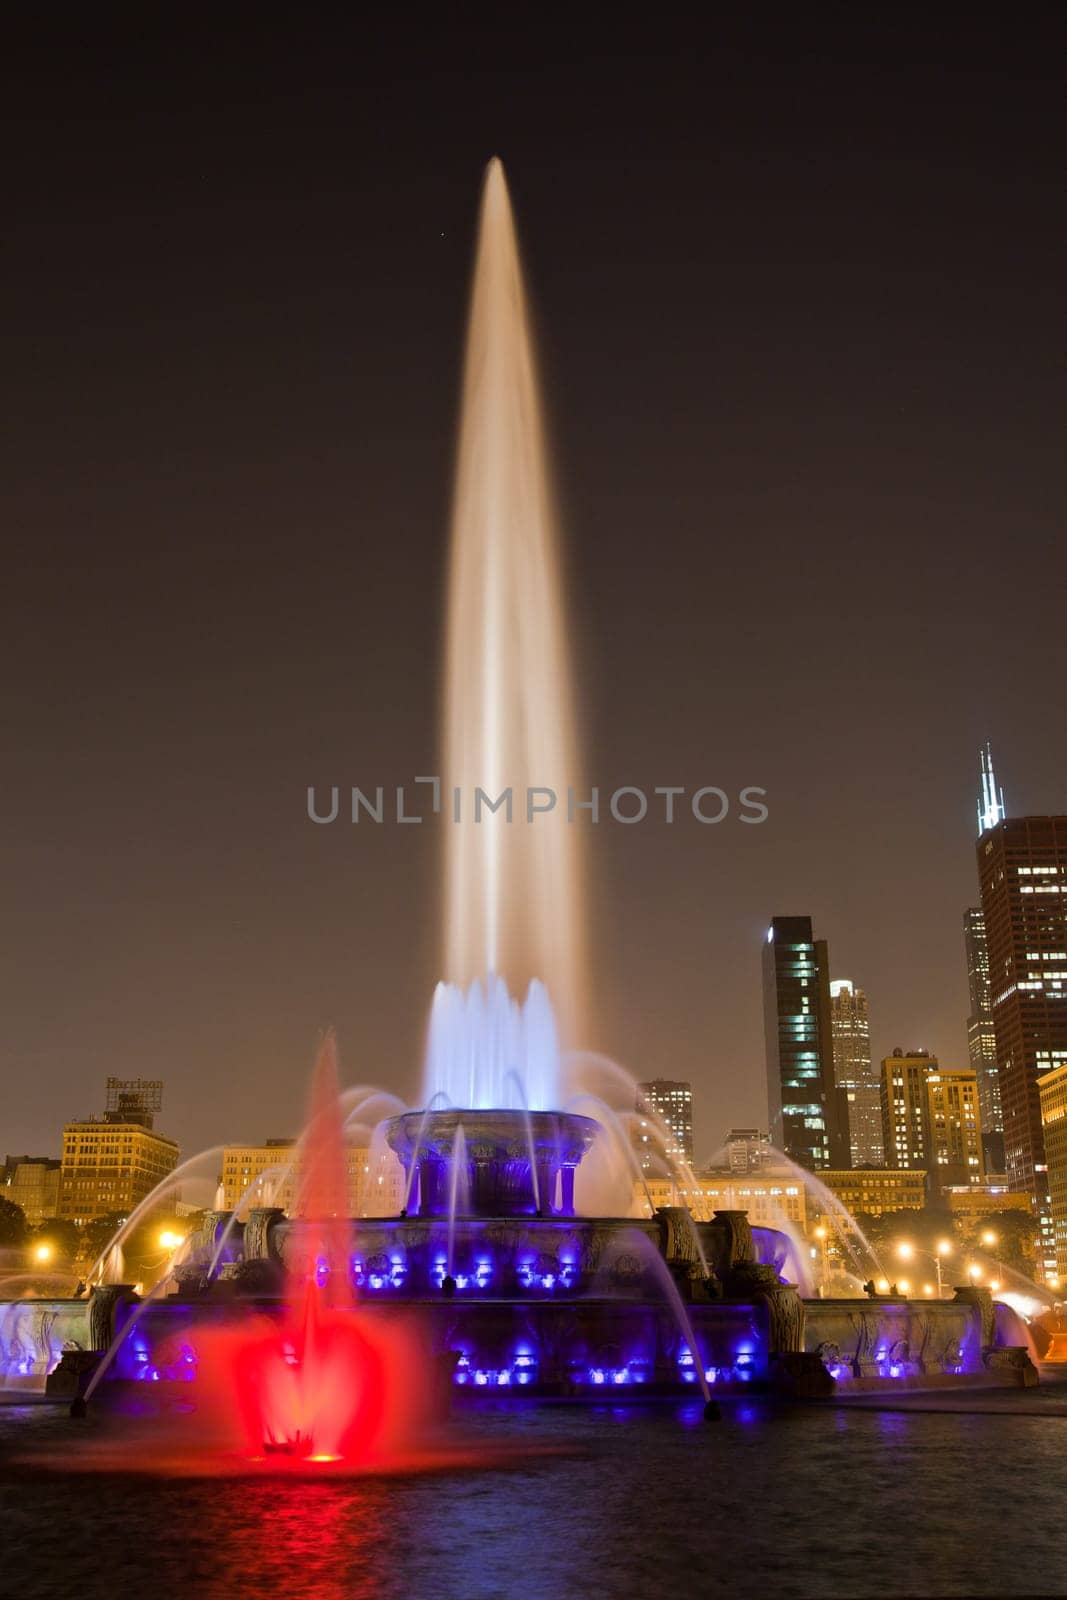 Nighttime Splendor: Vibrant cityscape of Chicago, Illinois, showcases a majestic illuminated fountain against a backdrop of illuminated buildings, capturing the beauty of urban life at night.